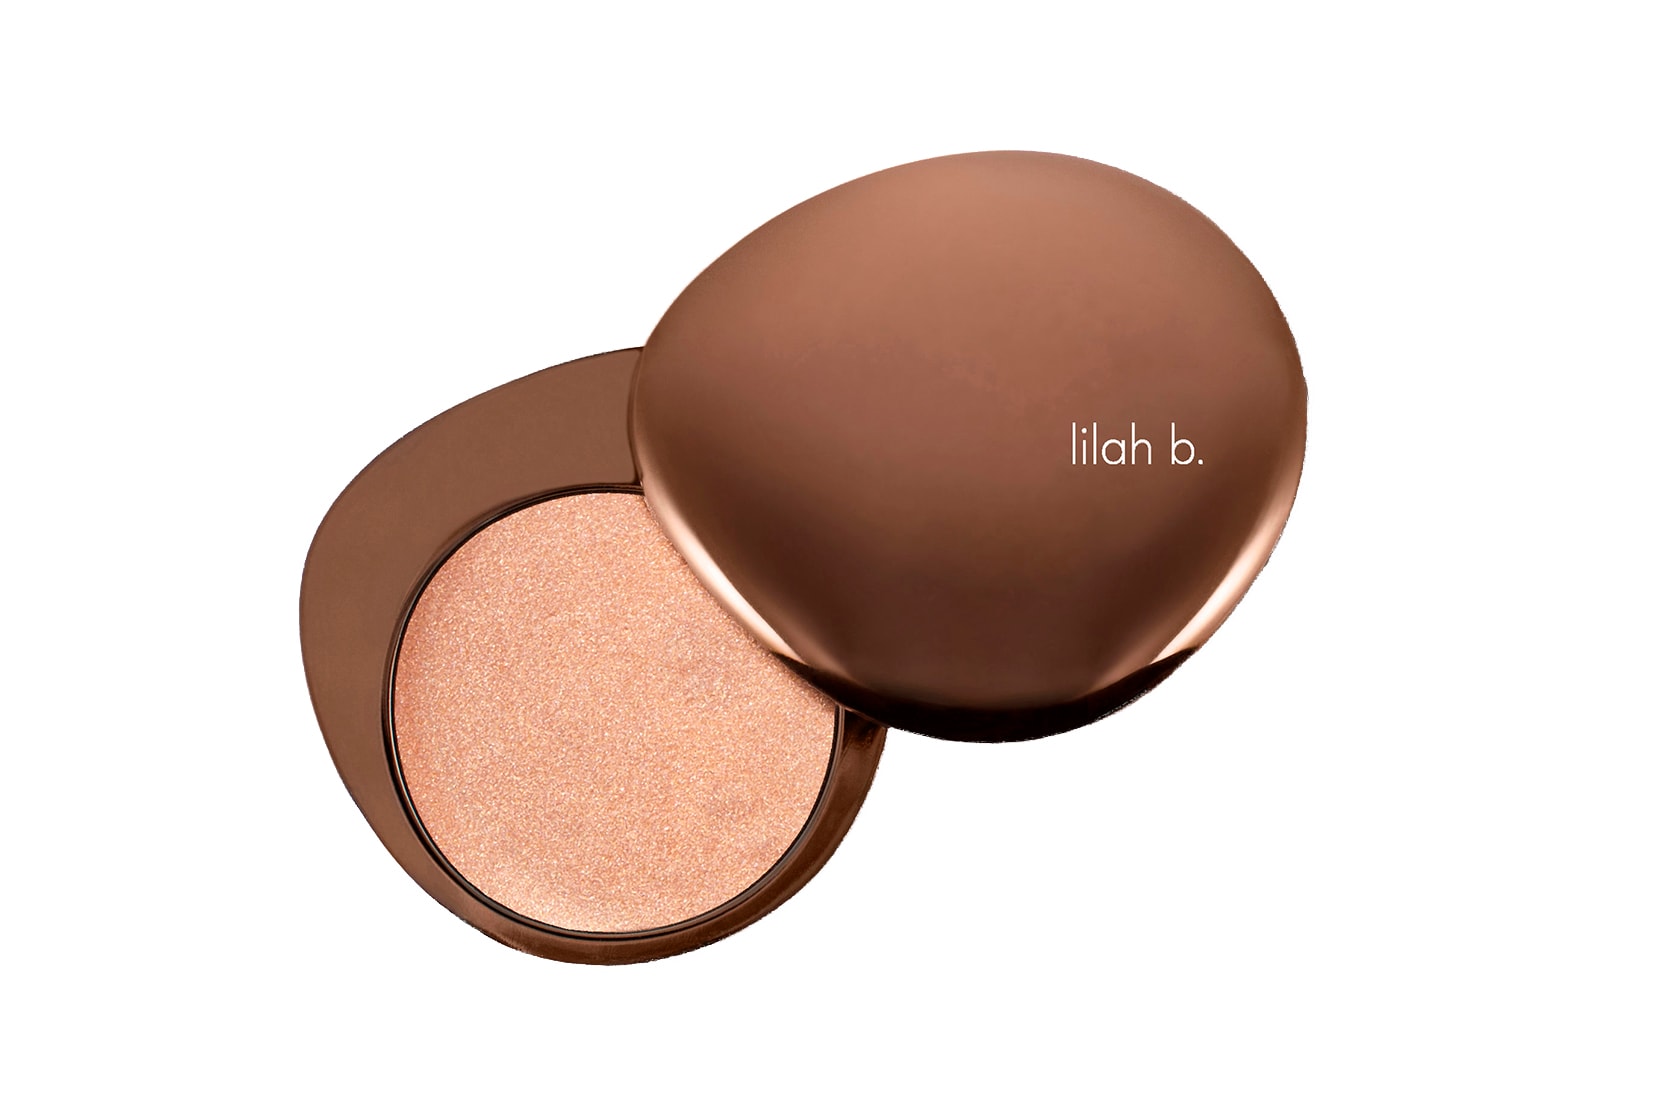 lilah b glisten + glow skin illuminator highlighter captivating rose bronze makeup release price